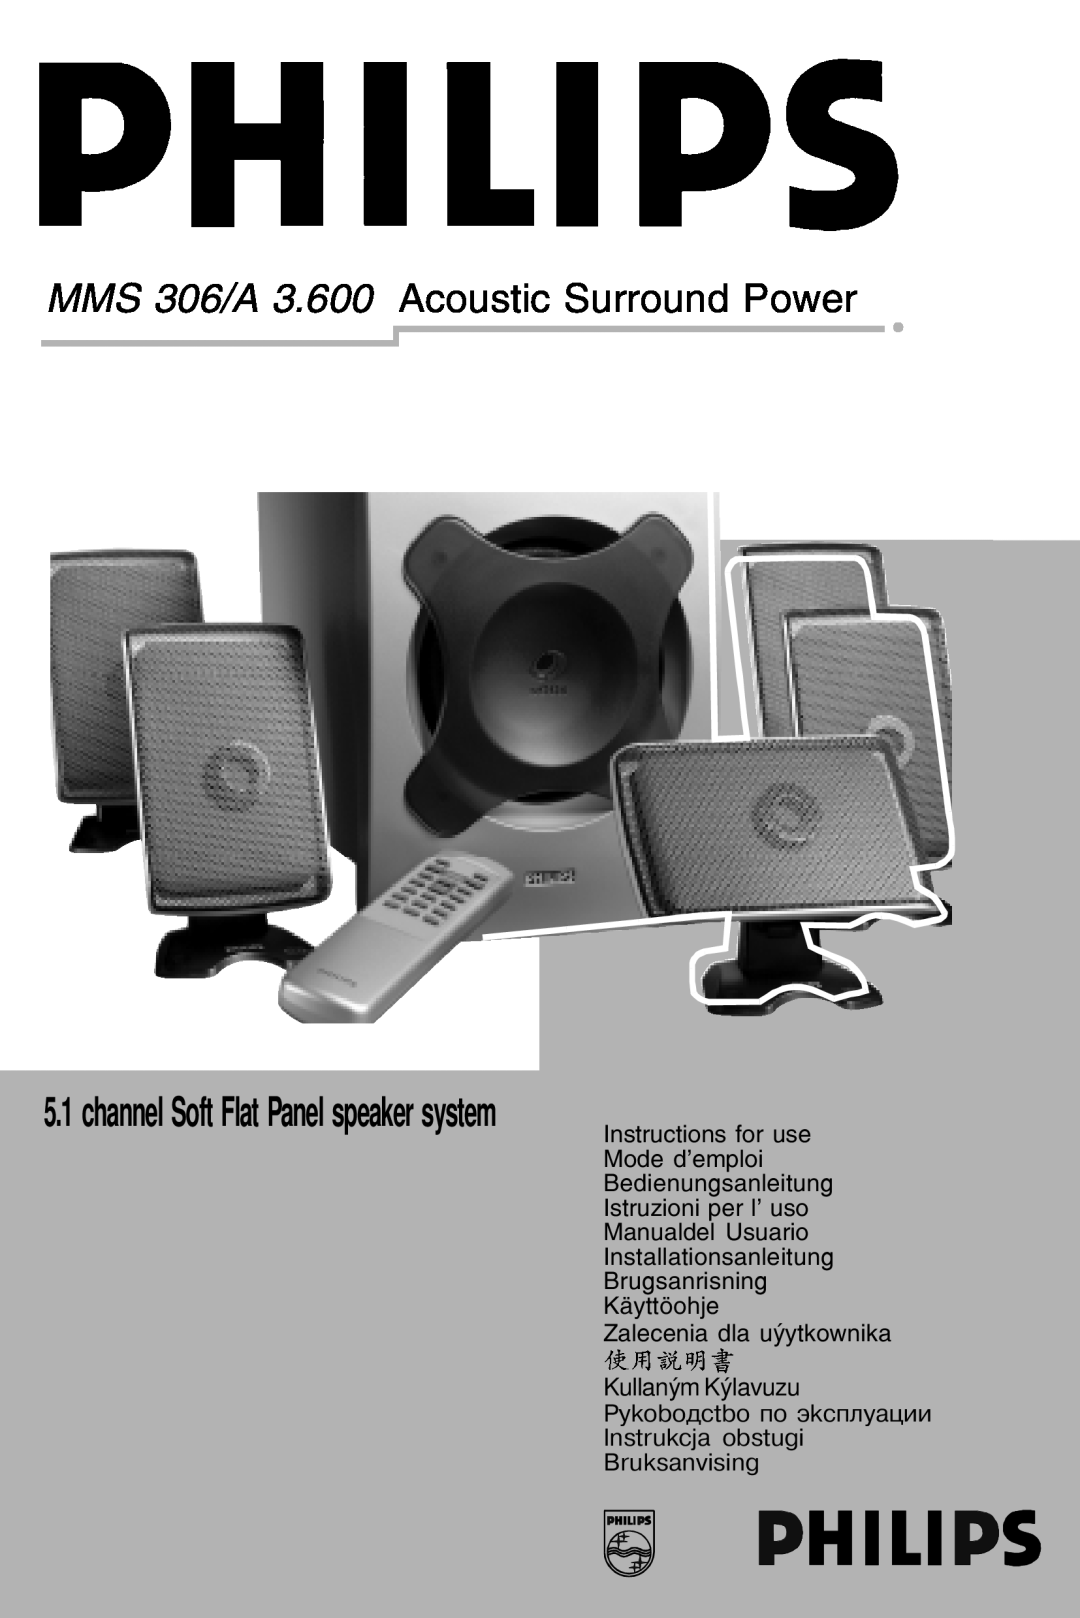 Philips MMS 306/A manual channel Soft Flat Panel speaker system, Zalecenia dla uý ytkownika 